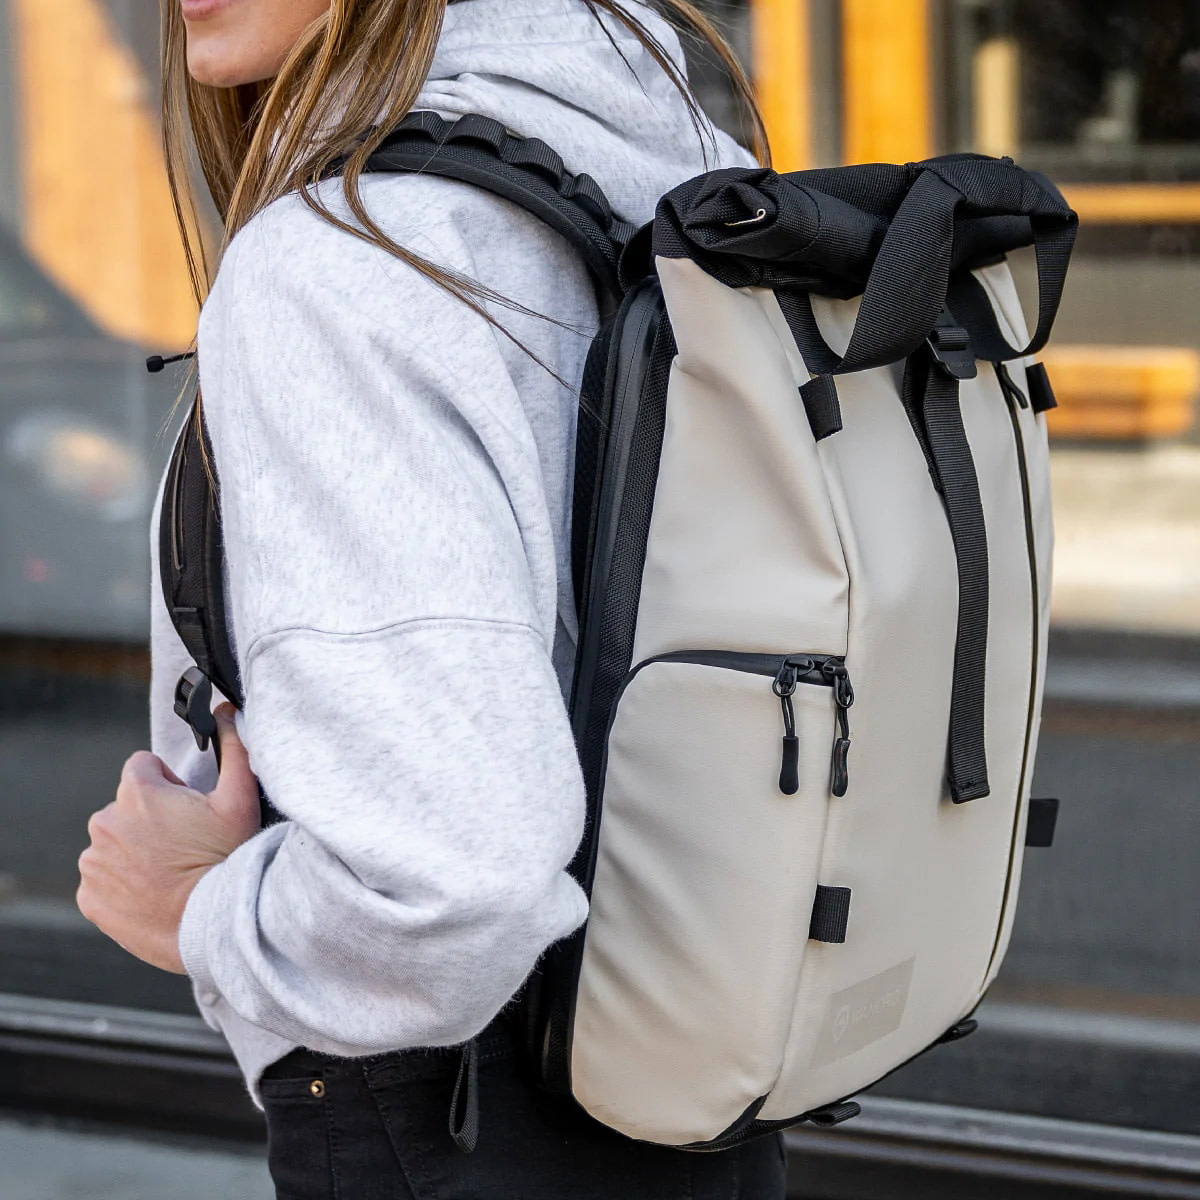 Lightweight camera backpack